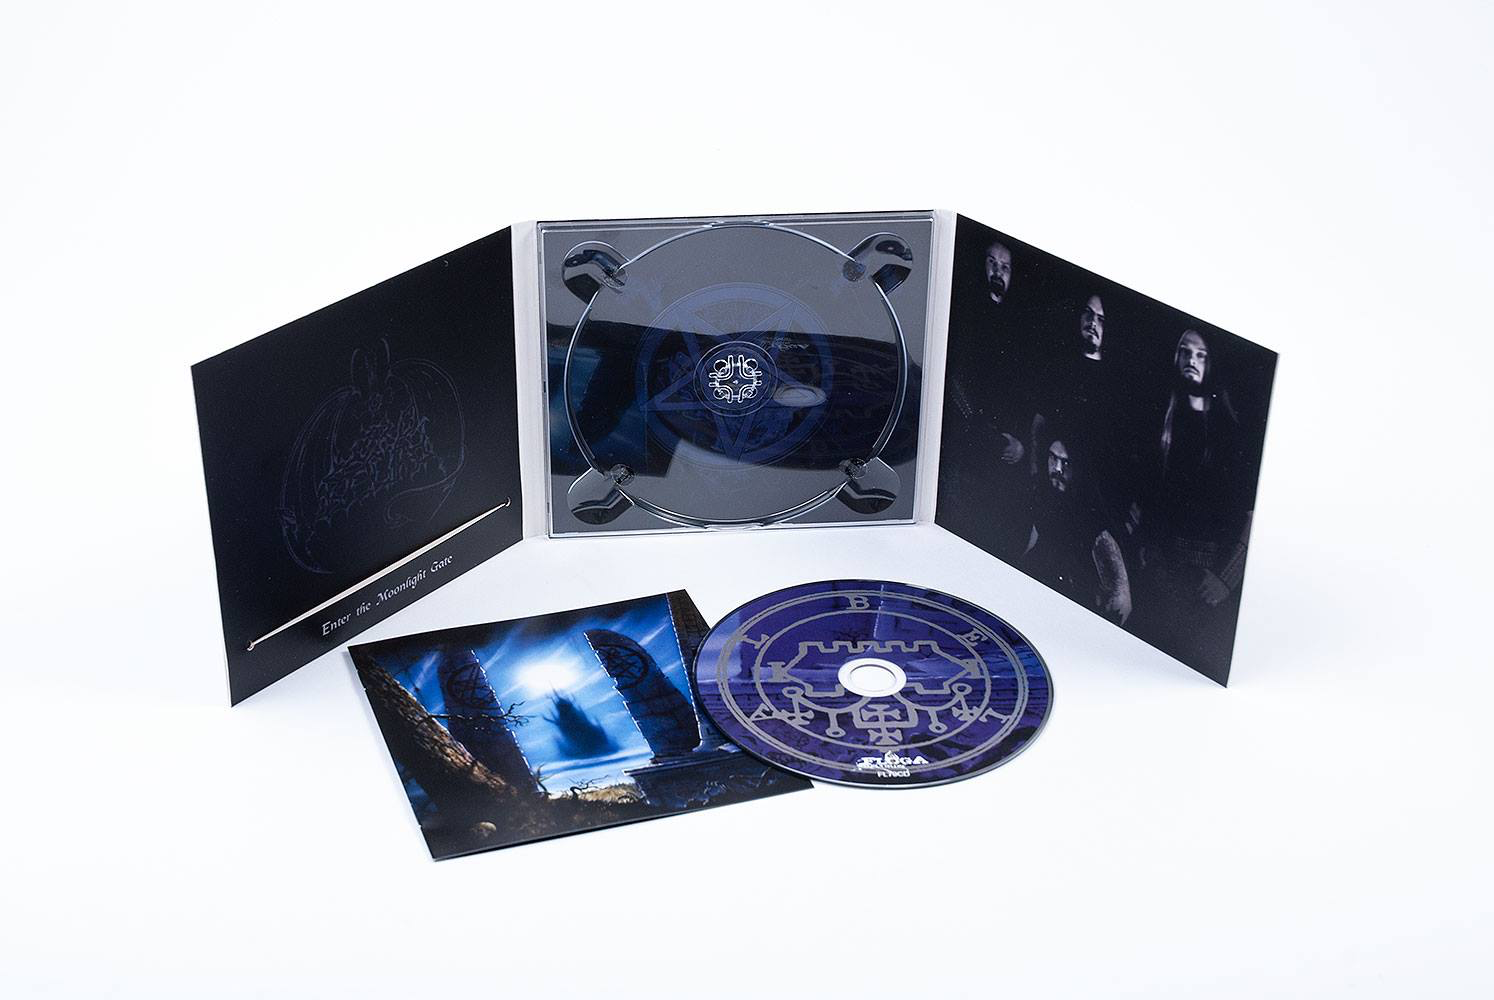 LORD BELIAL - Enter the moonlight gate - Digipack CD